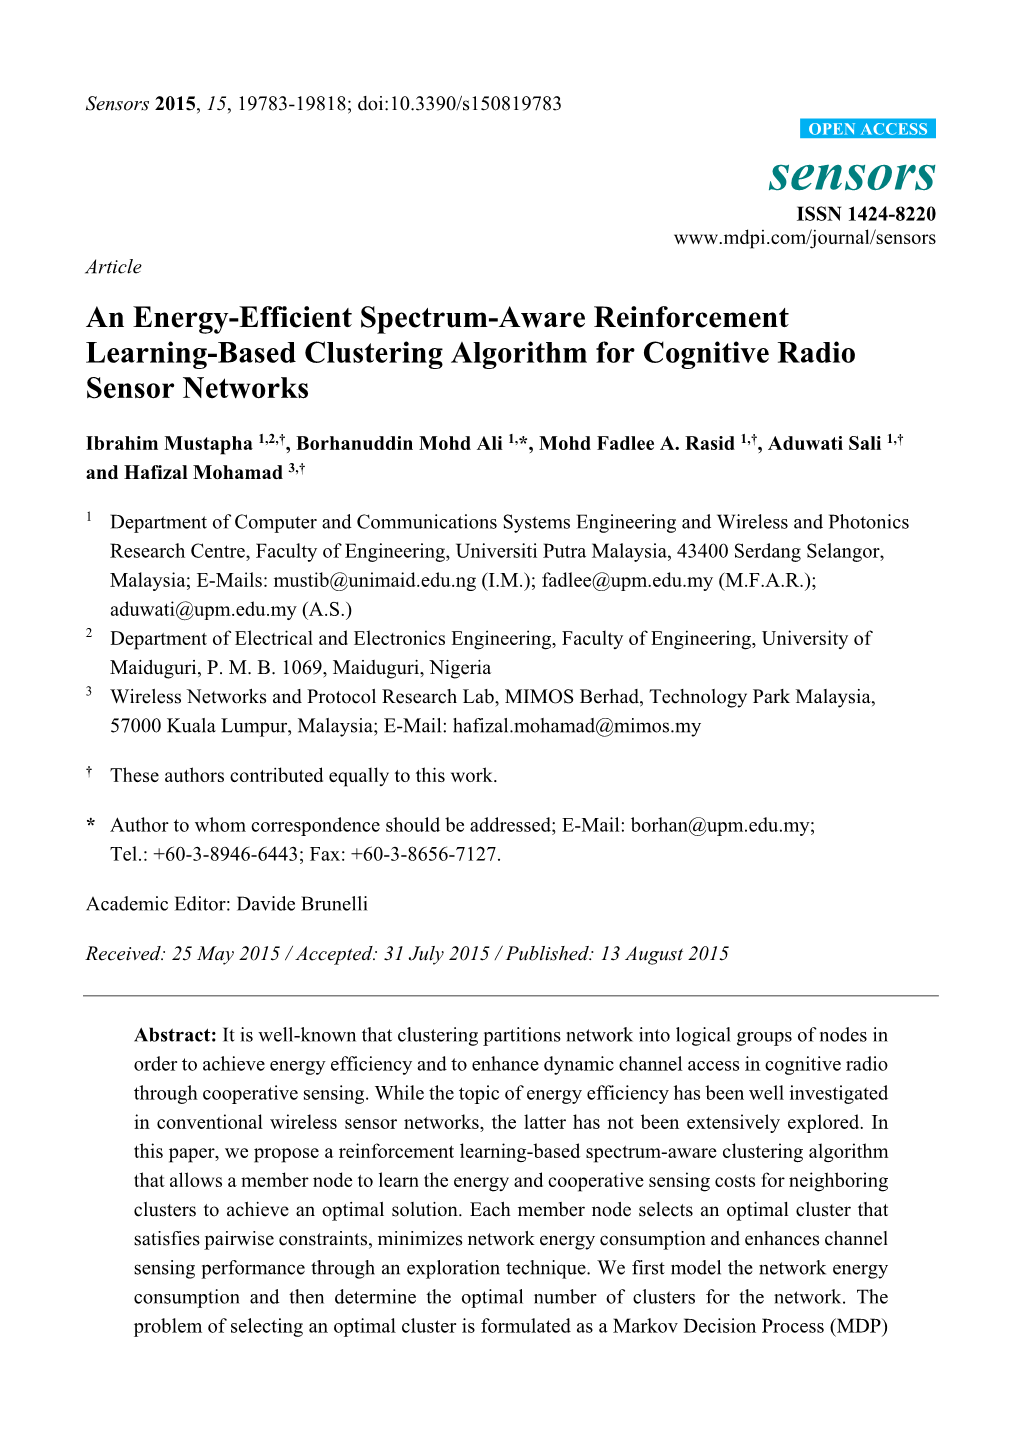 An Energy-Efficient Spectrum-Aware Reinforcement Learning-Based Clustering Algorithm for Cognitive Radio Sensor Networks